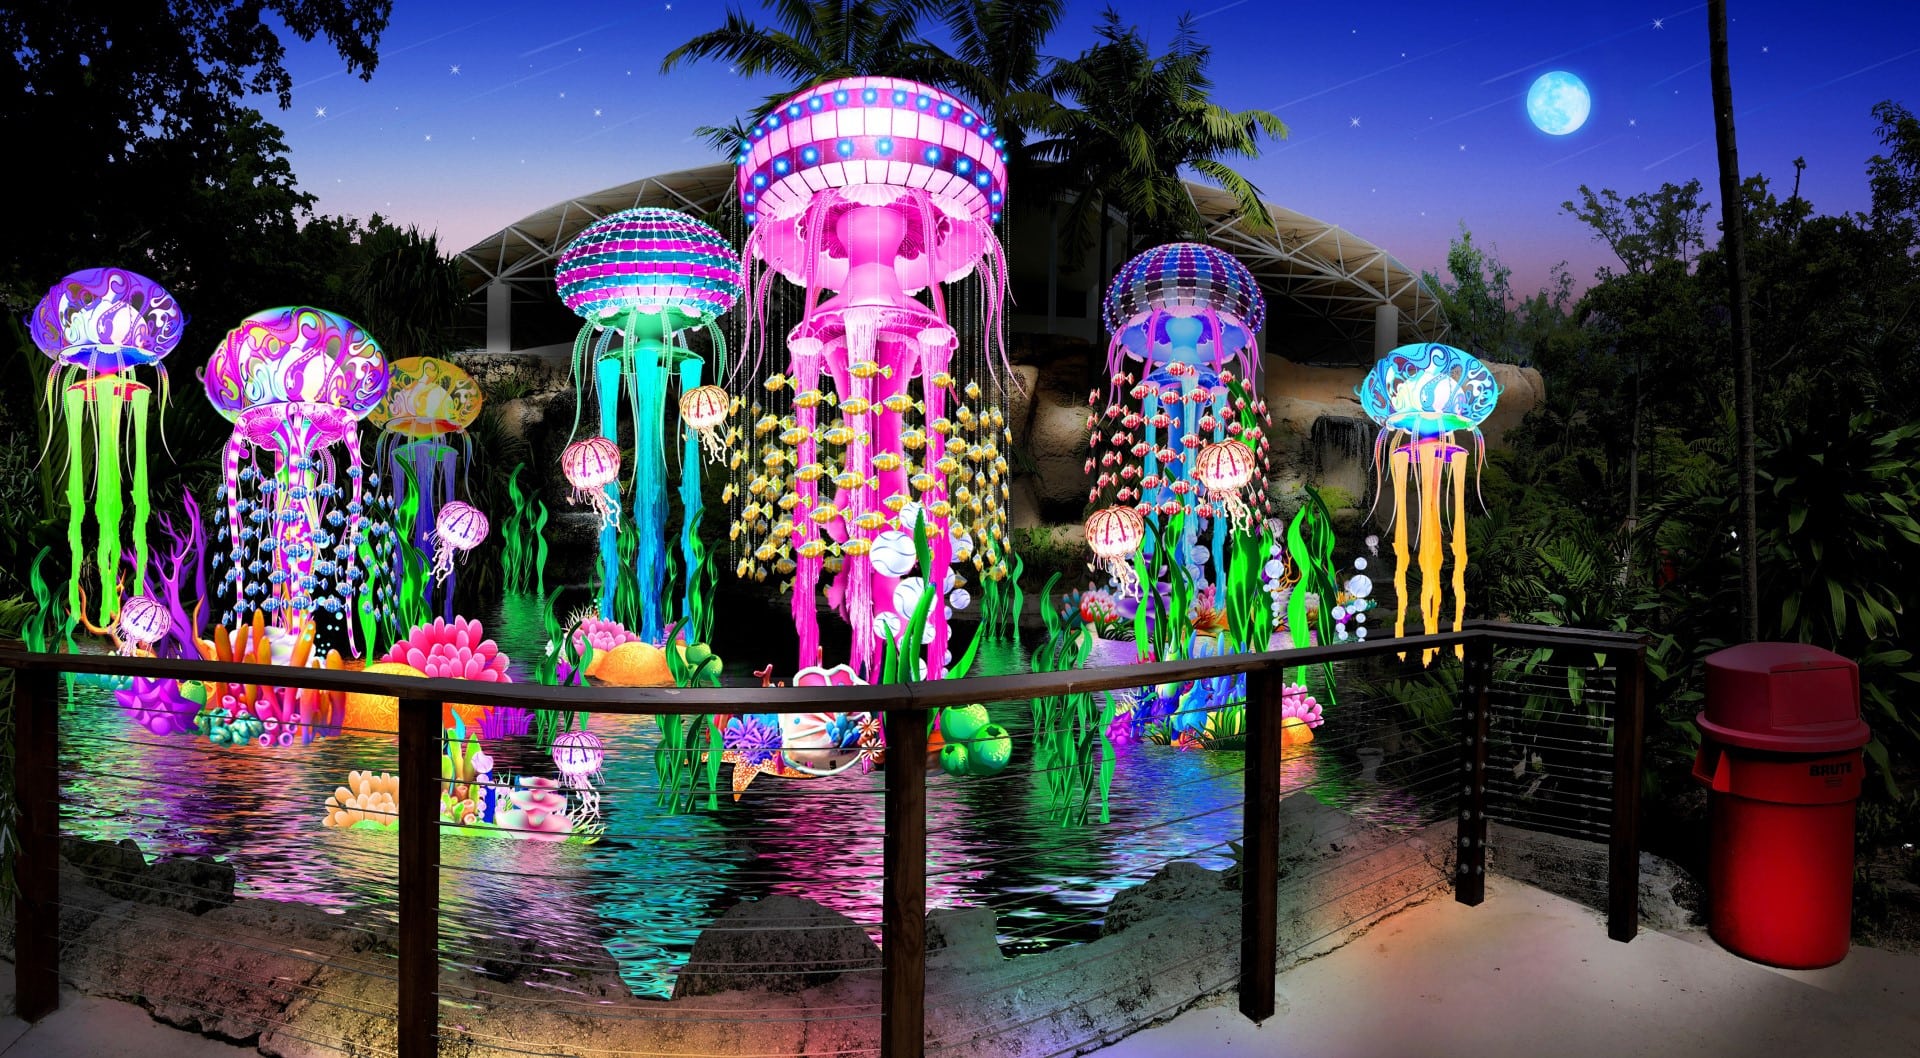 Chinese lantern festival comes to Florida ecoadventure park